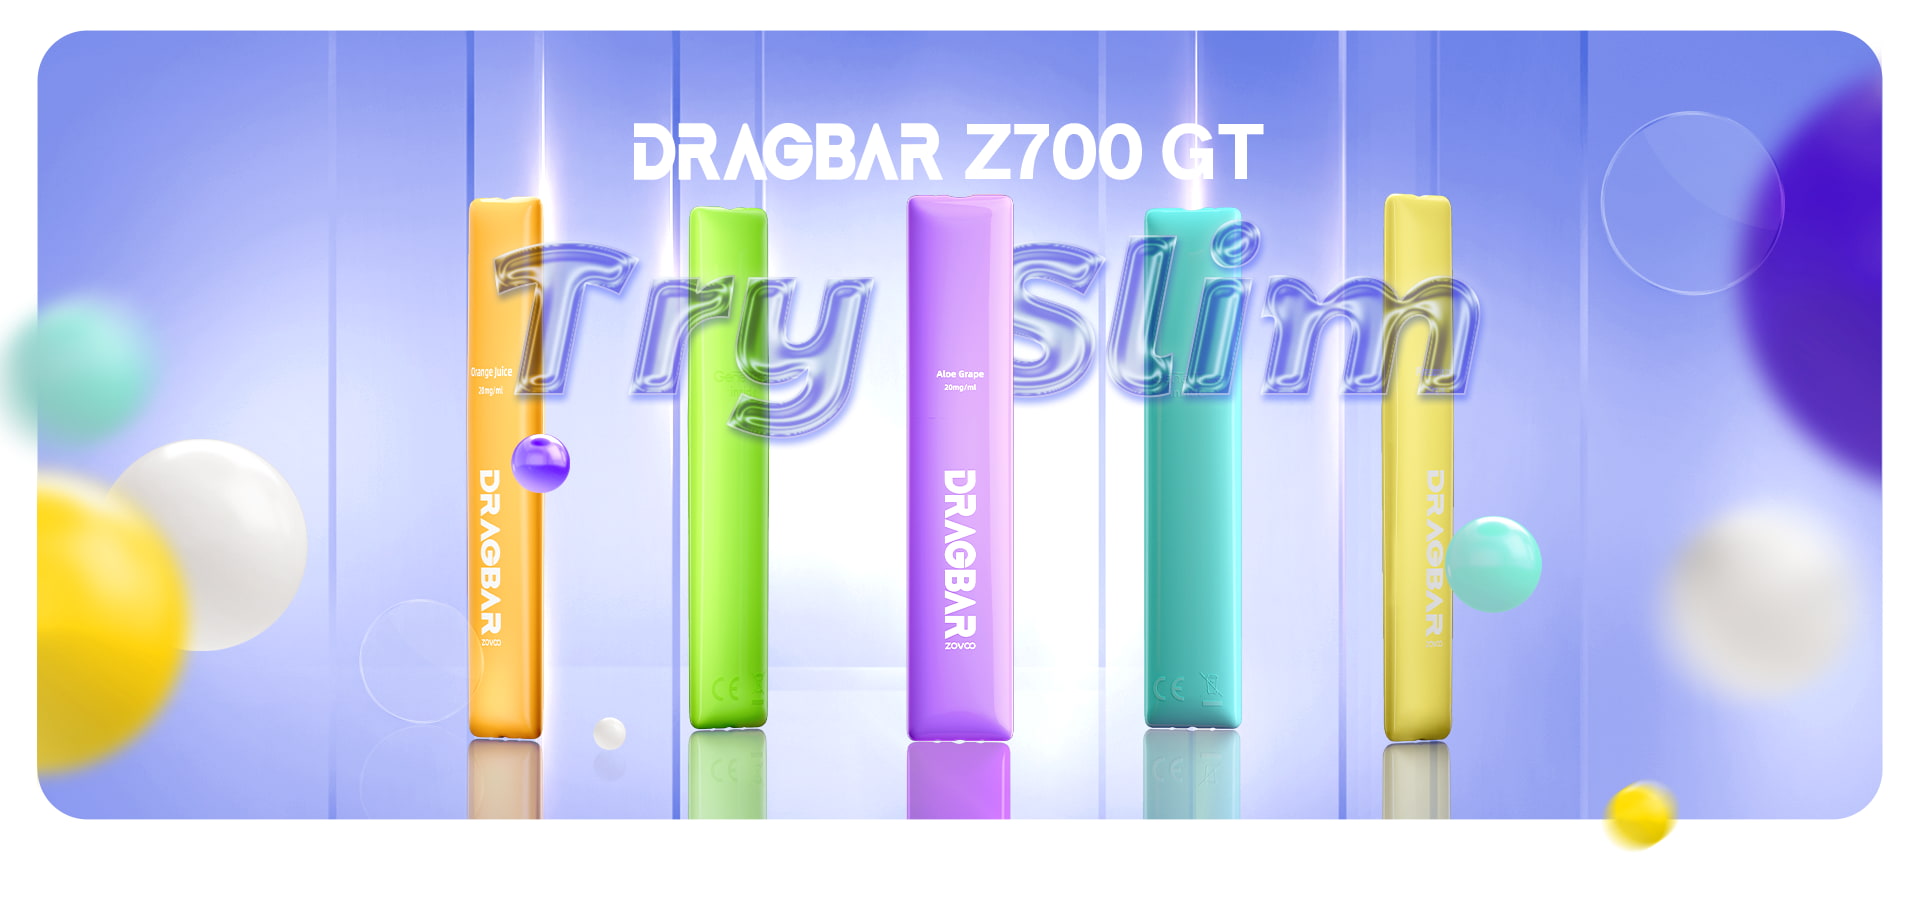 Drag Bar Z700 GT